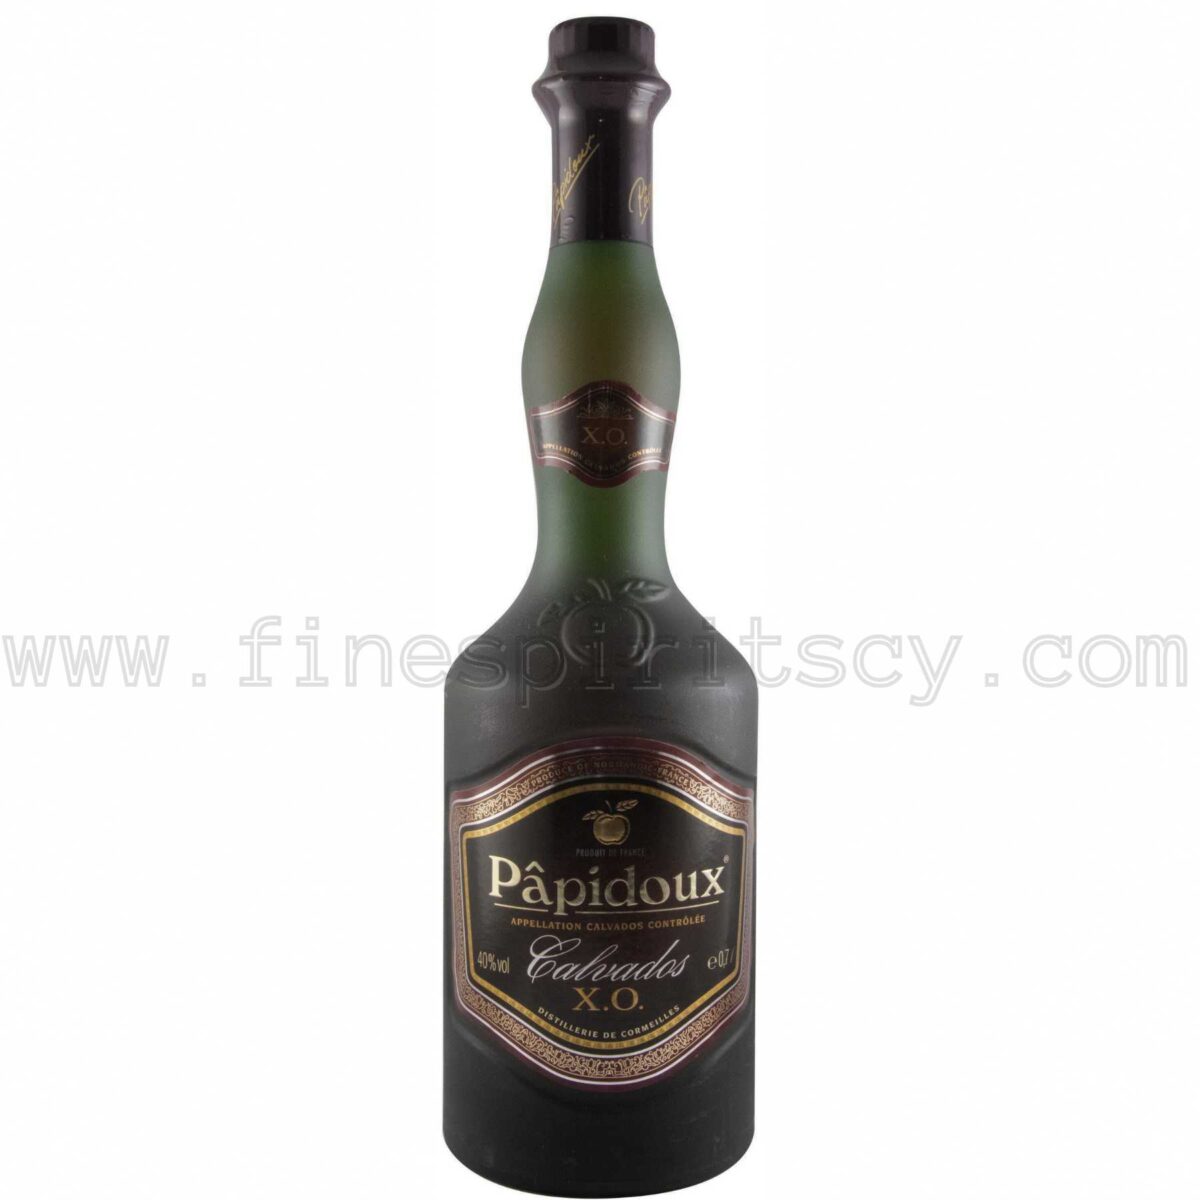 Papidoux Calvados XO French Cognac Brandy France Cyprus Price